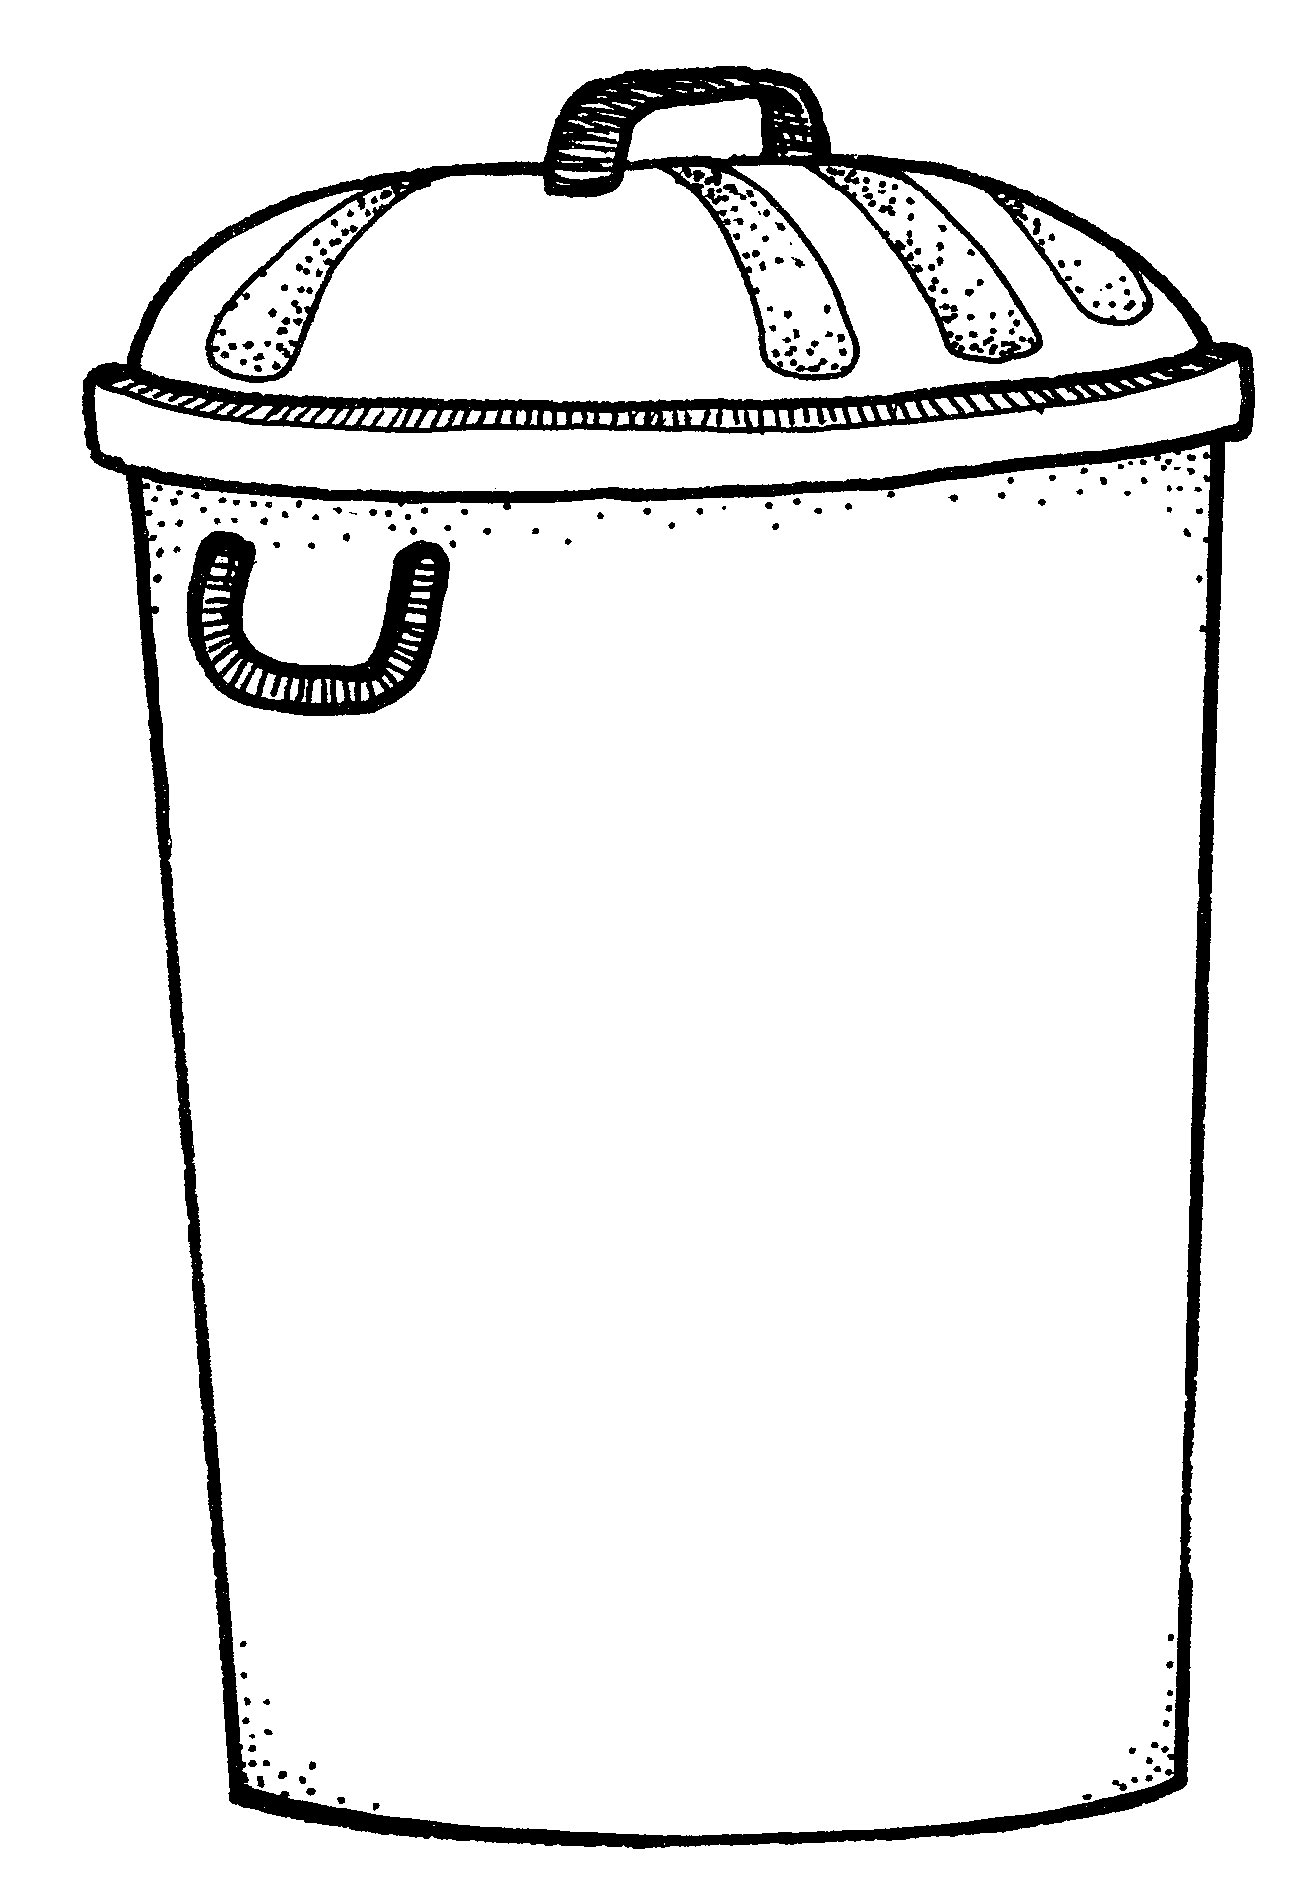 Clipart waste bin - ClipartFox